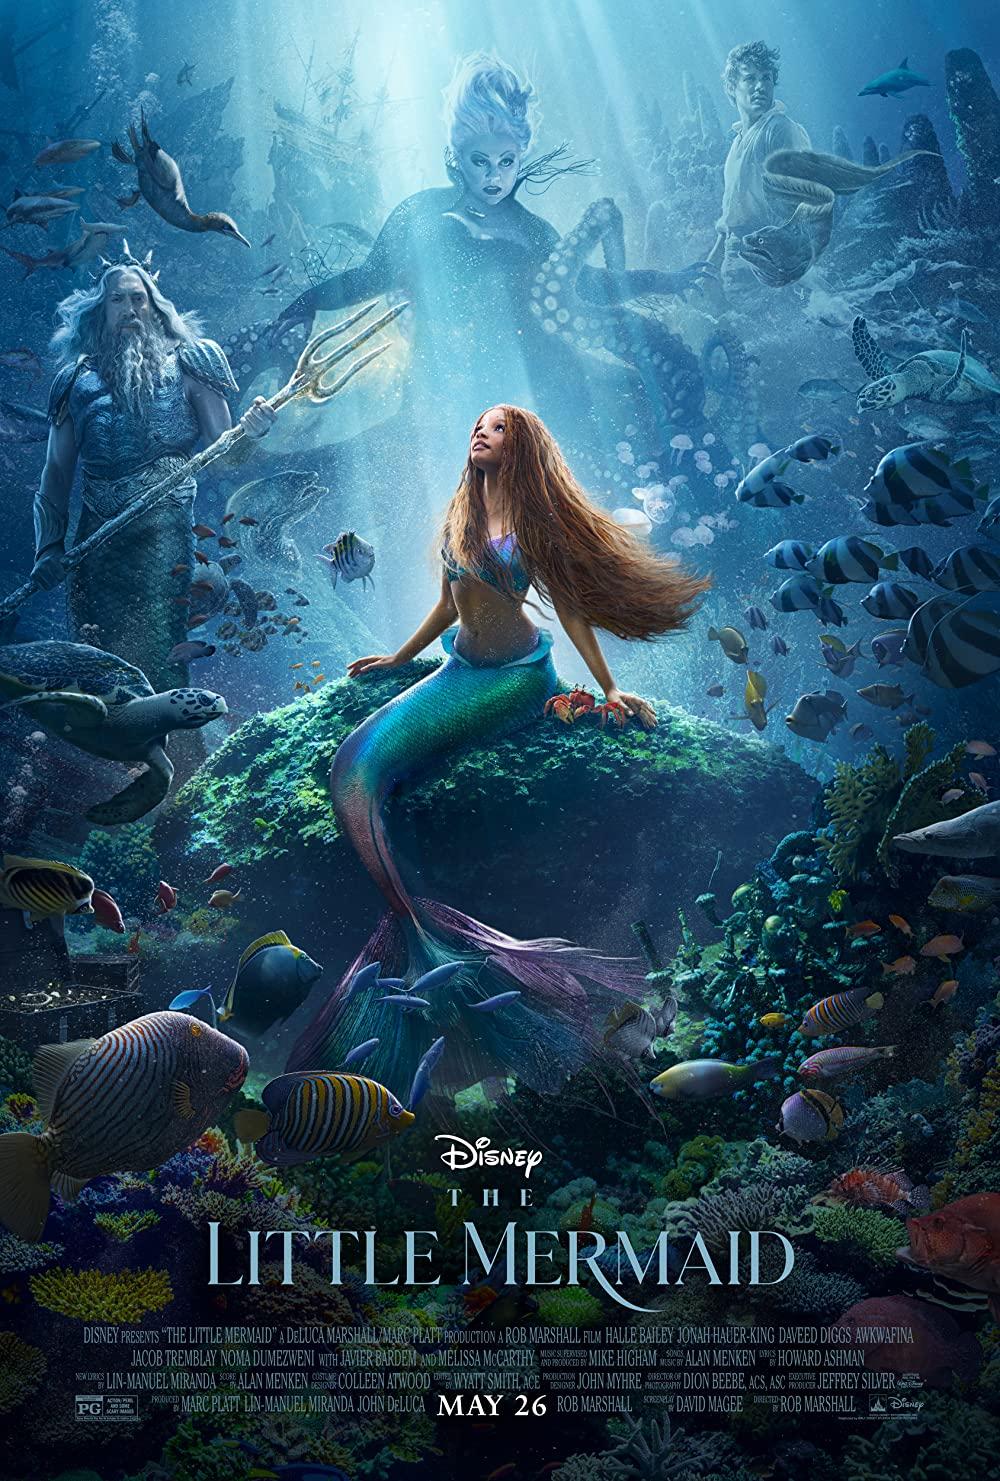 The Little Mermaid (September 6 - Disney+ Hotstar)Dive into Disney's latest live-action remake, 